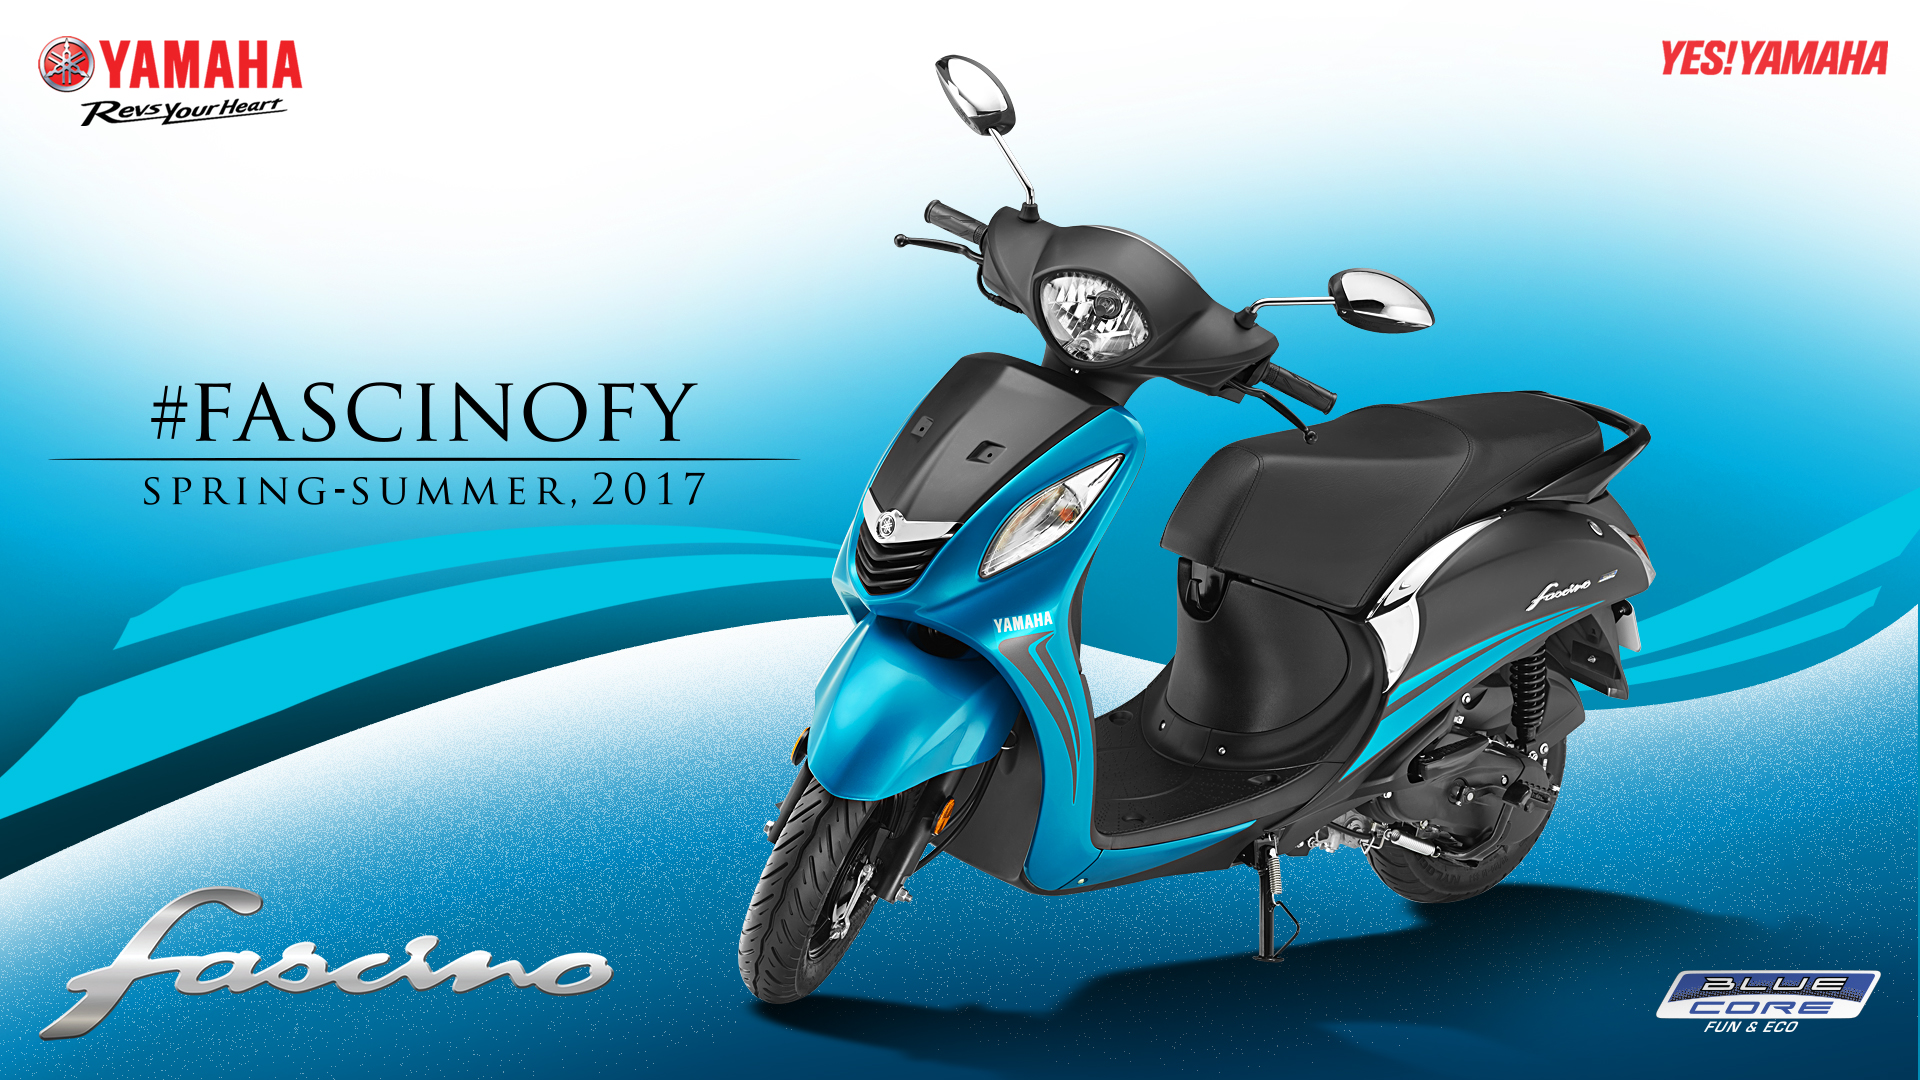 New 2017 Yamaha Fascino BS-IV Blue Colour Shade